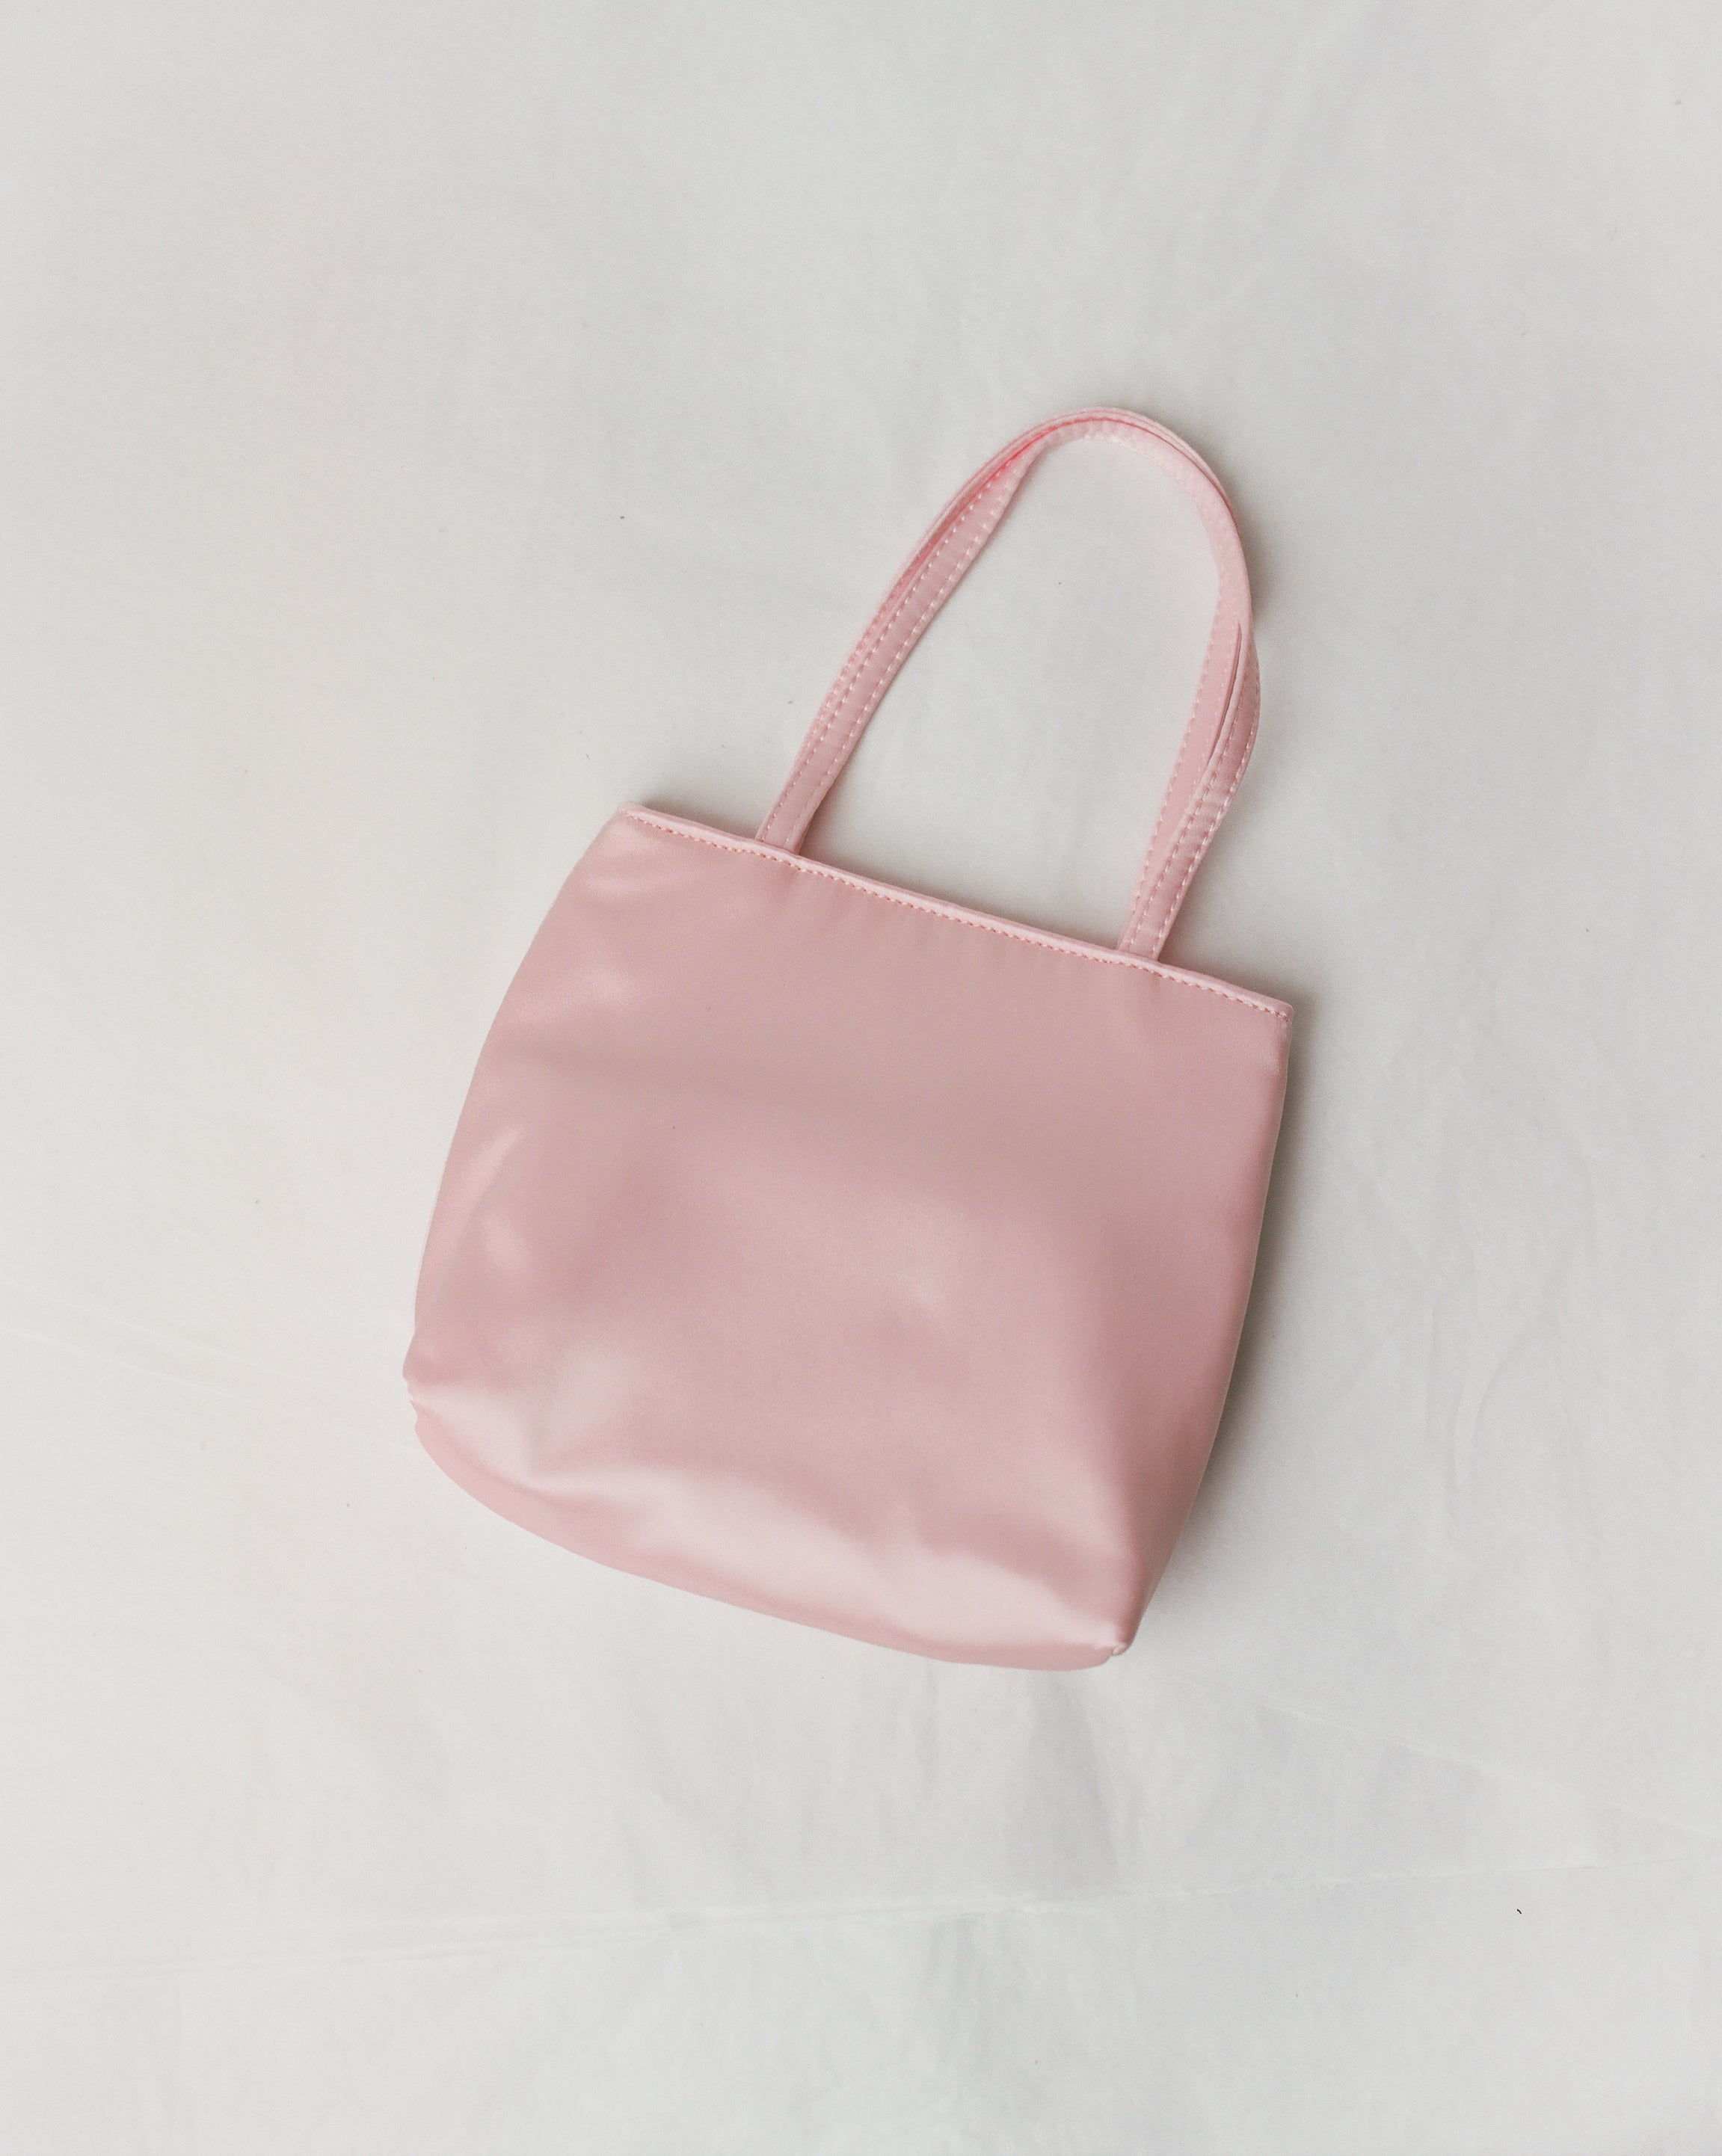 Bloom Pop Art Gift Retro Lover Girly Vintage Style Girl Fan Tote Bag by  Jeff Creation - Pixels